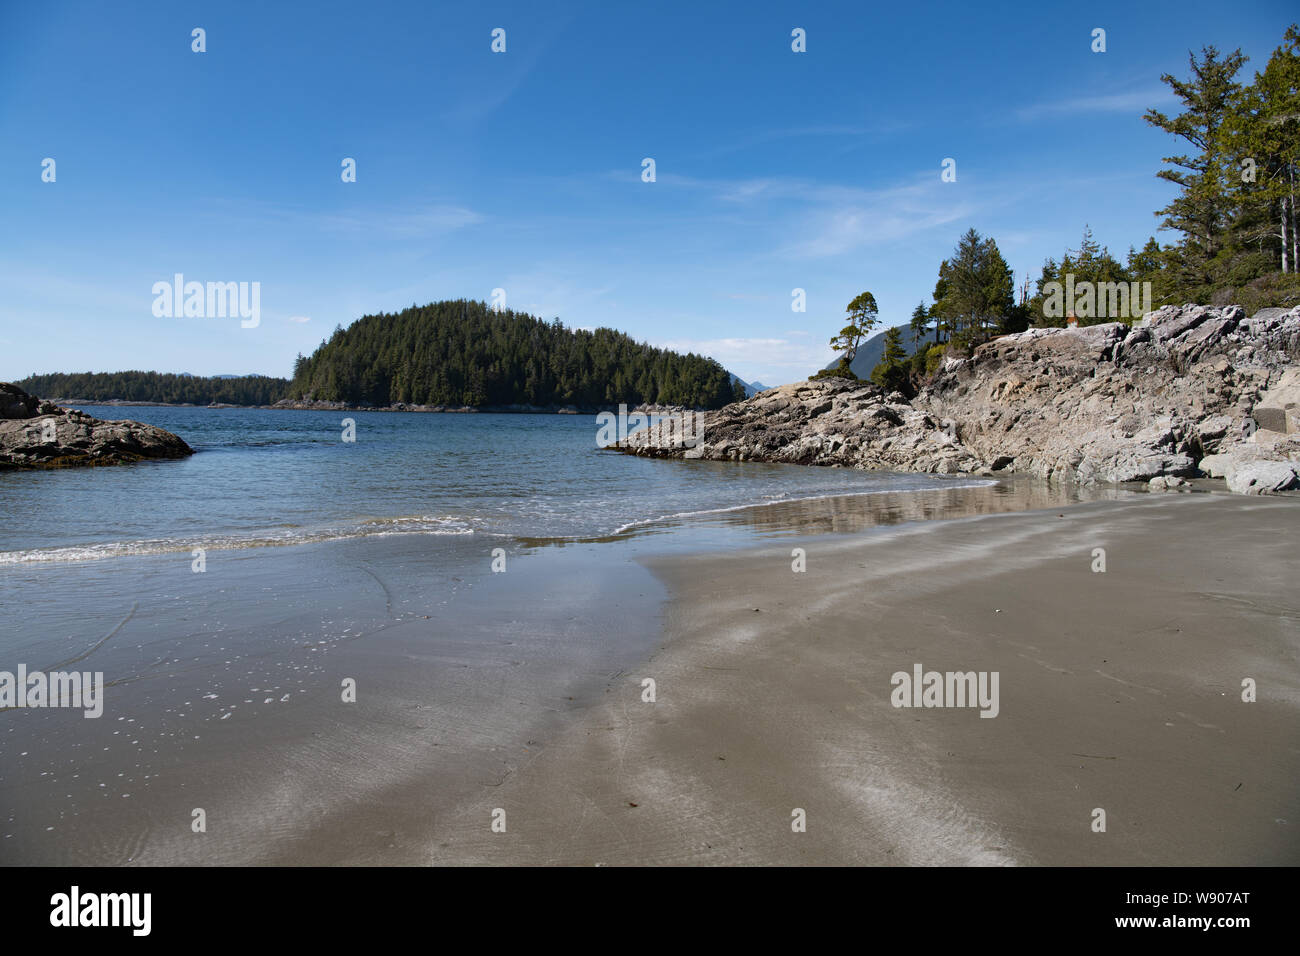 peaceful scene looking across an empty sandy beach at Tofino, Vancouver Island, British Columbia, Canada Stock Photo